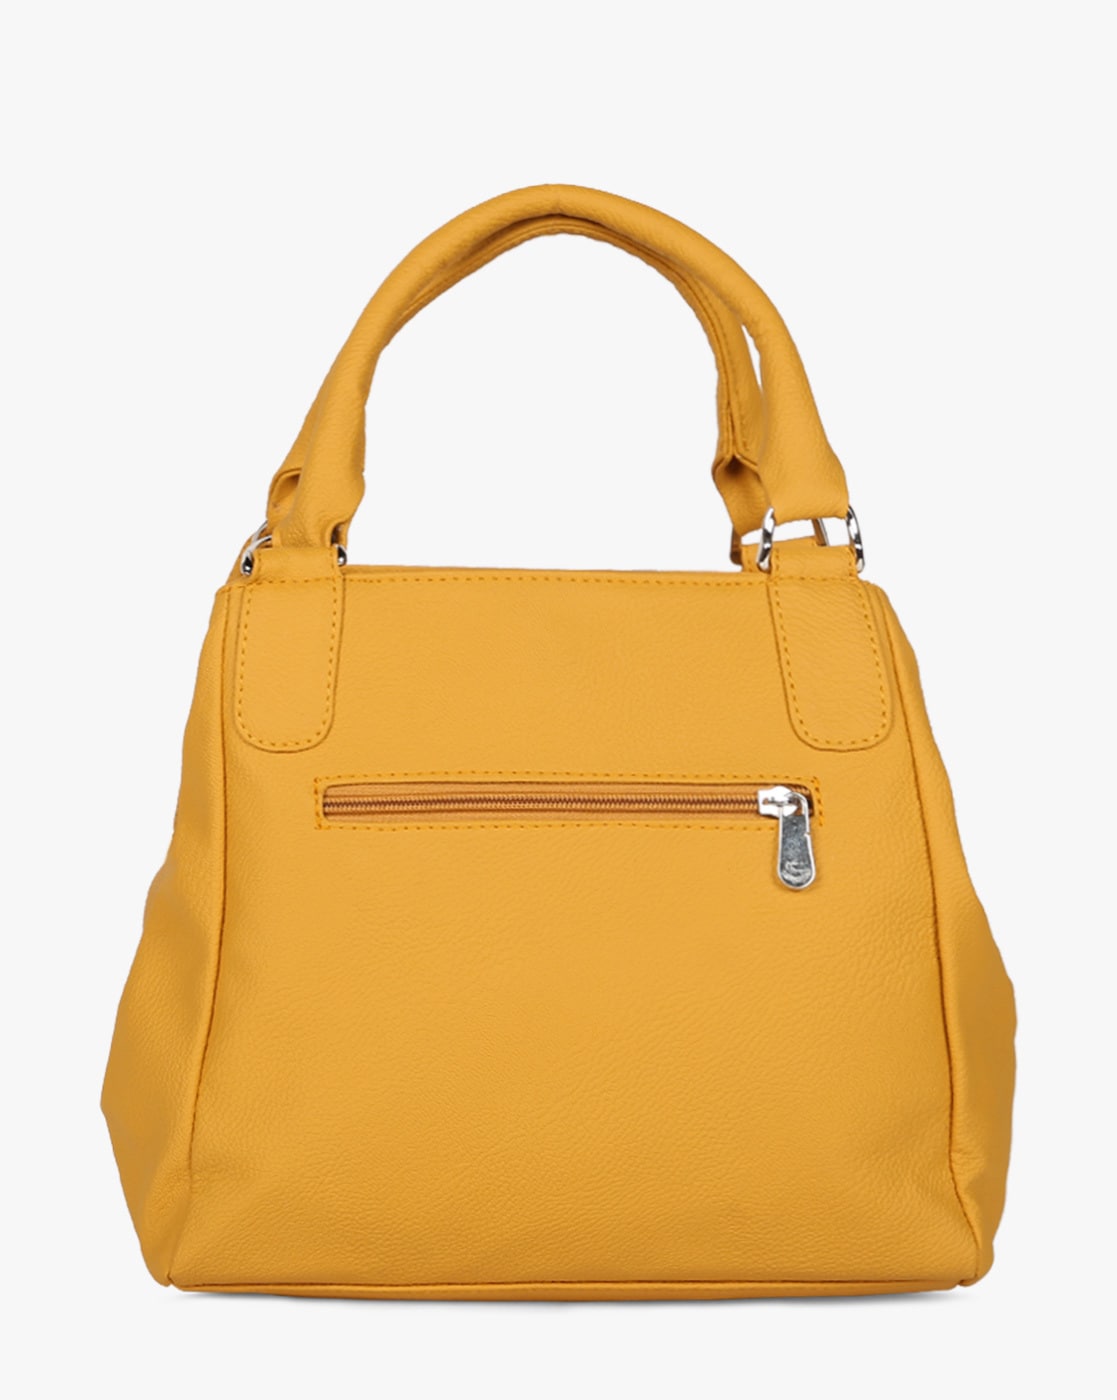 Mango Double Handle Shopper Handbag in Brown | Lyst